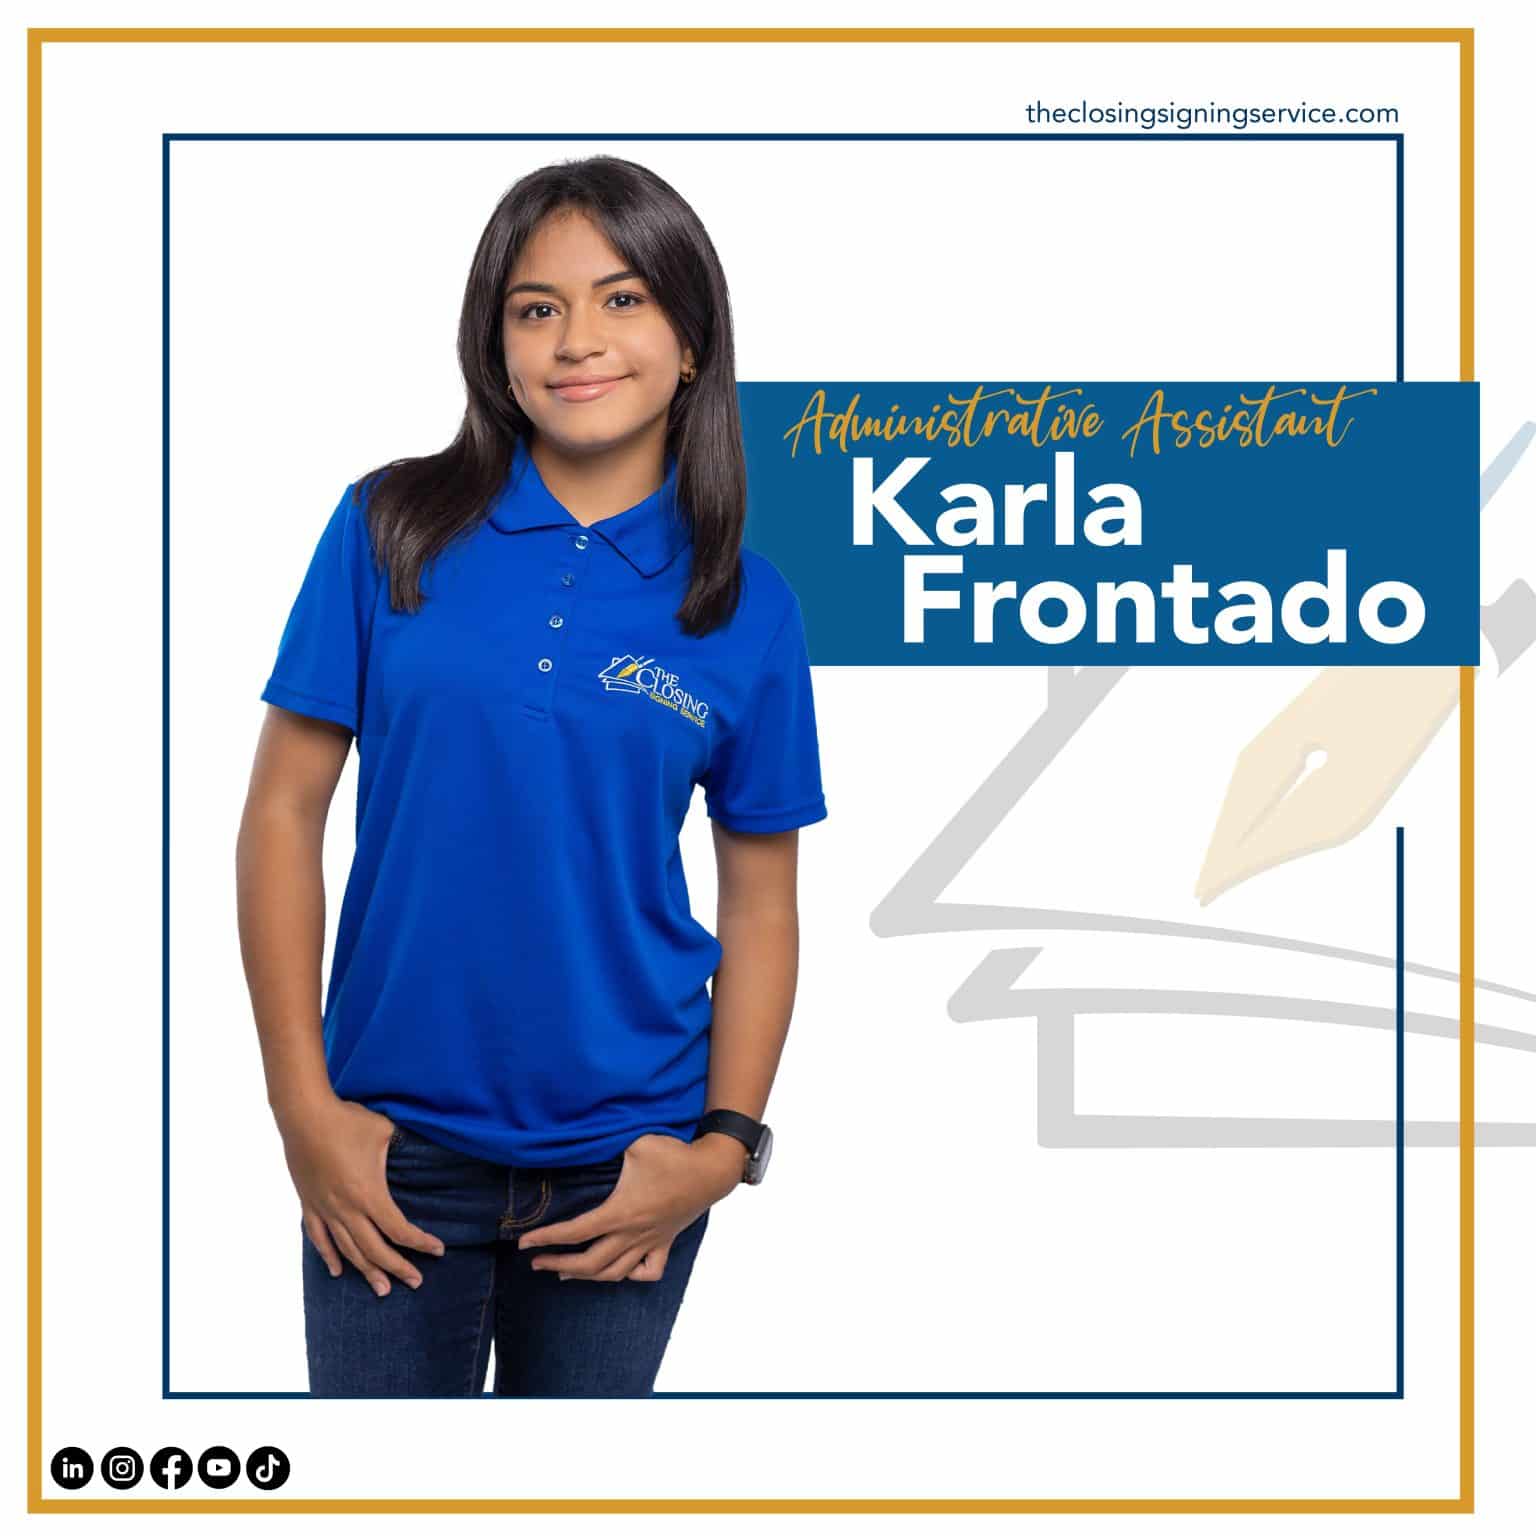 Karla - Executive Assistant